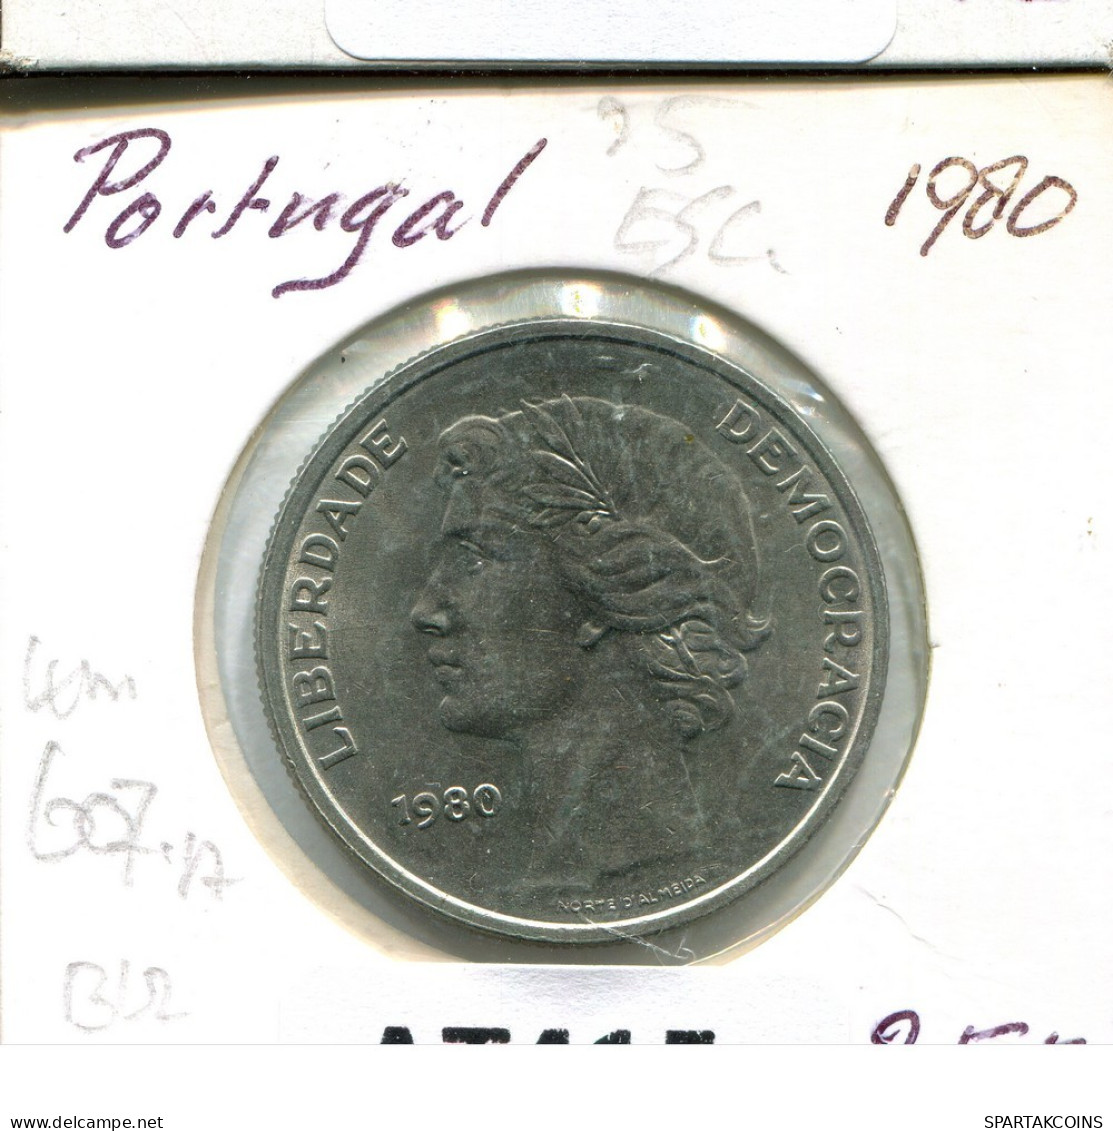 25 ESCUDOS 1980 PORTUGAL Coin #AT415.U.A - Portugal